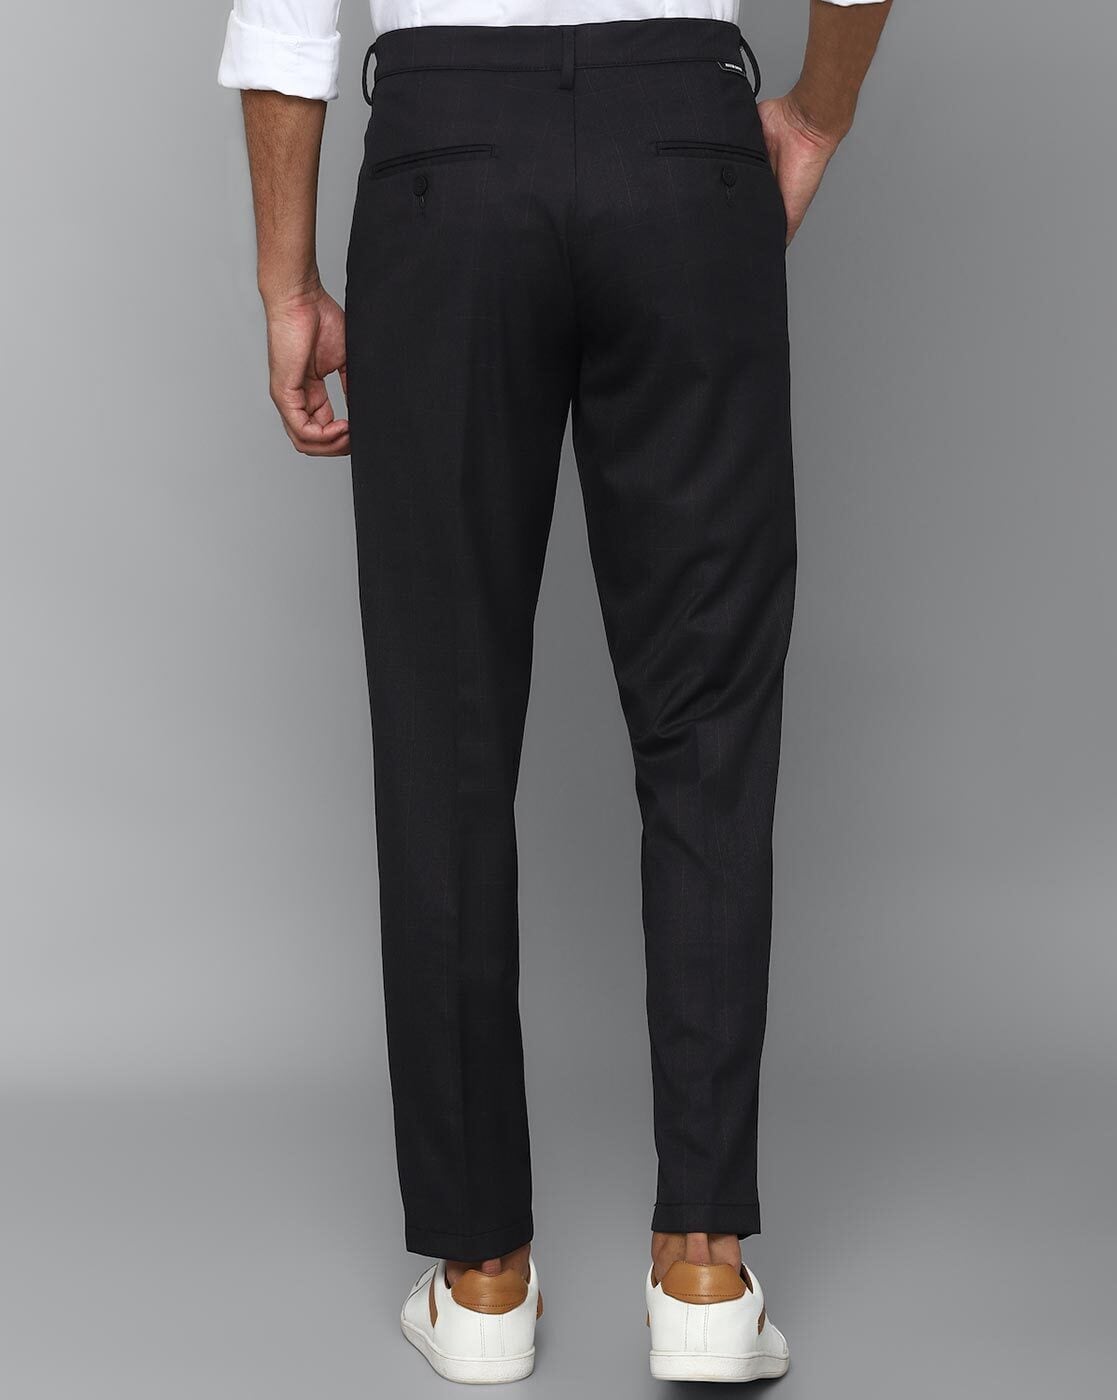 Buy Women Beige Solid Business Casual Trousers Online  197243  Allen Solly